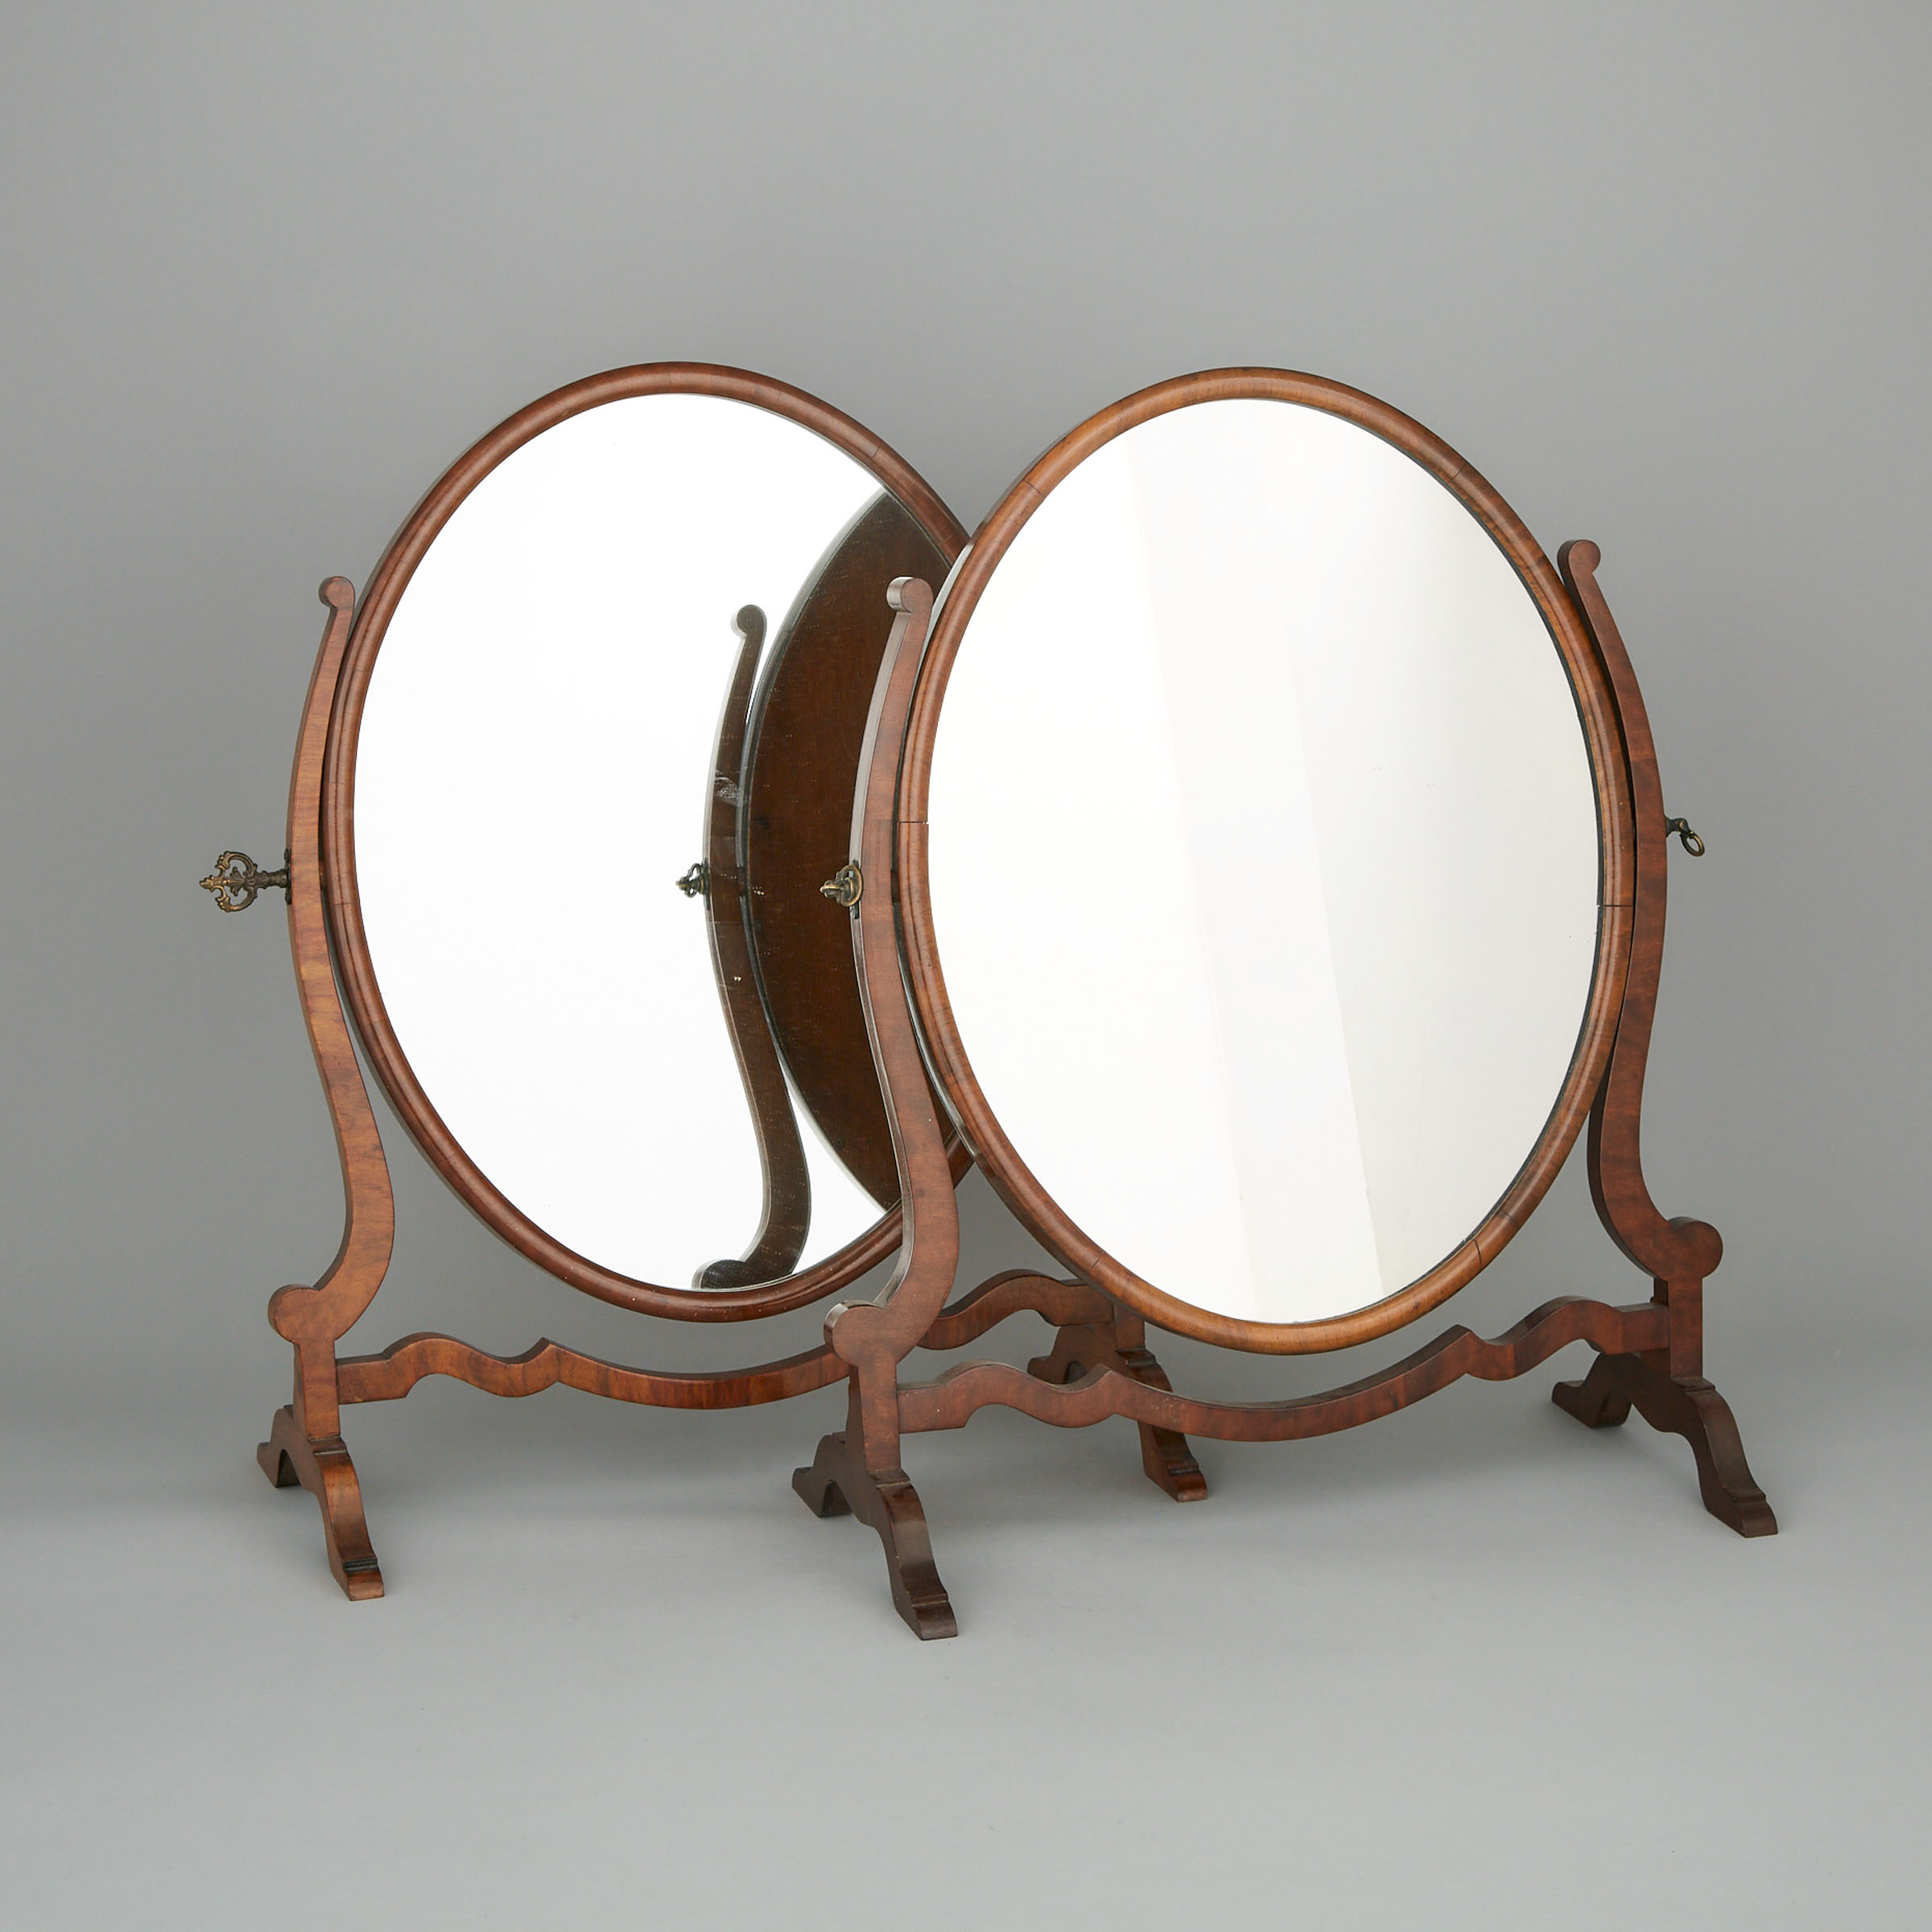 Pair of Edwardian Mahogany Dressing Table Mirrors, early 20th century